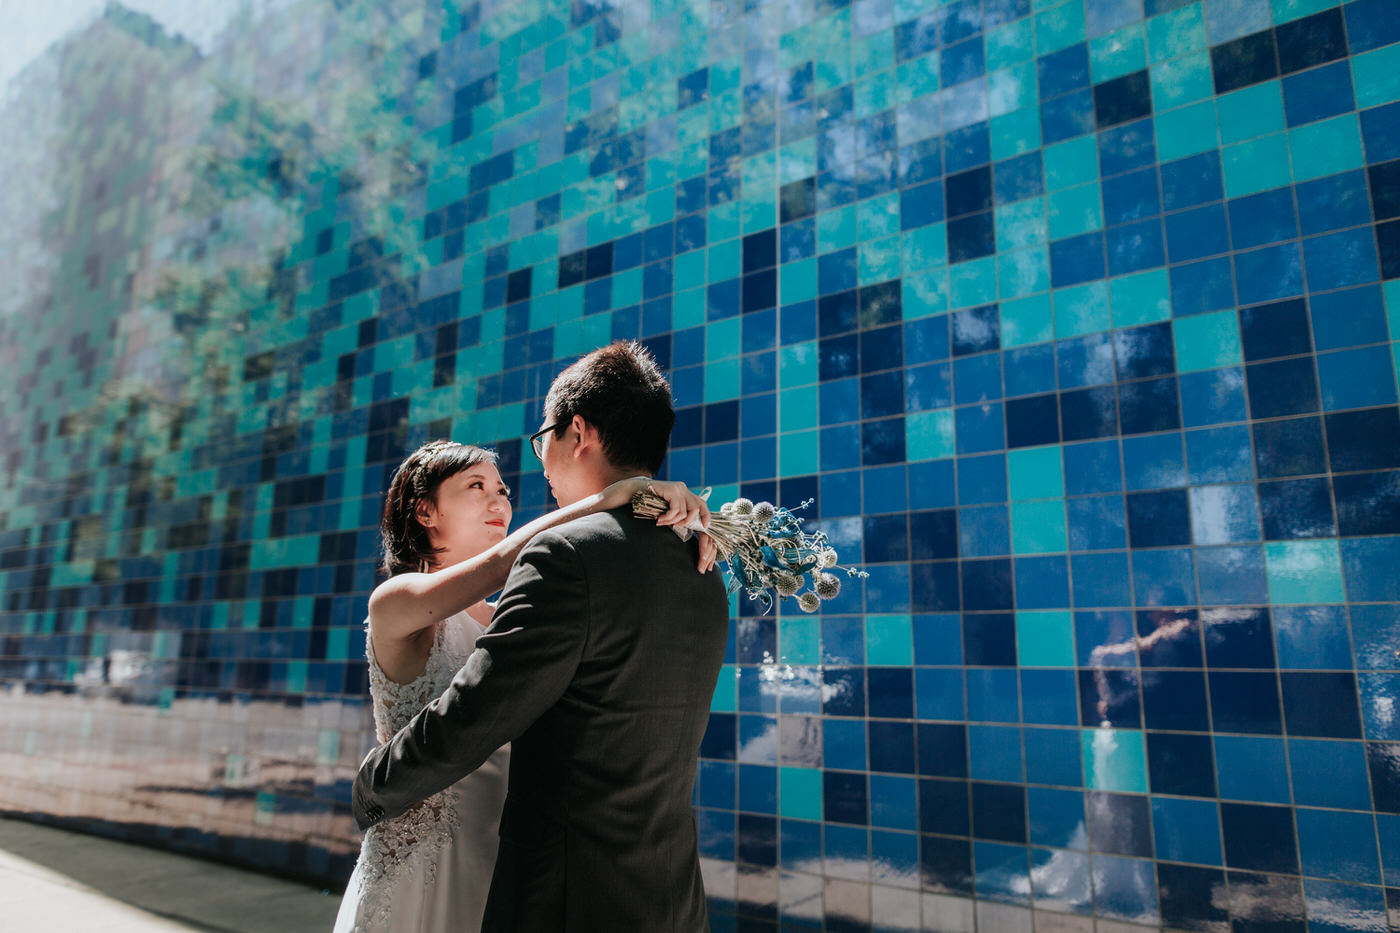 Blue Tile Wall Wedding - Diana Ascarrrunz Photography -300.jpg